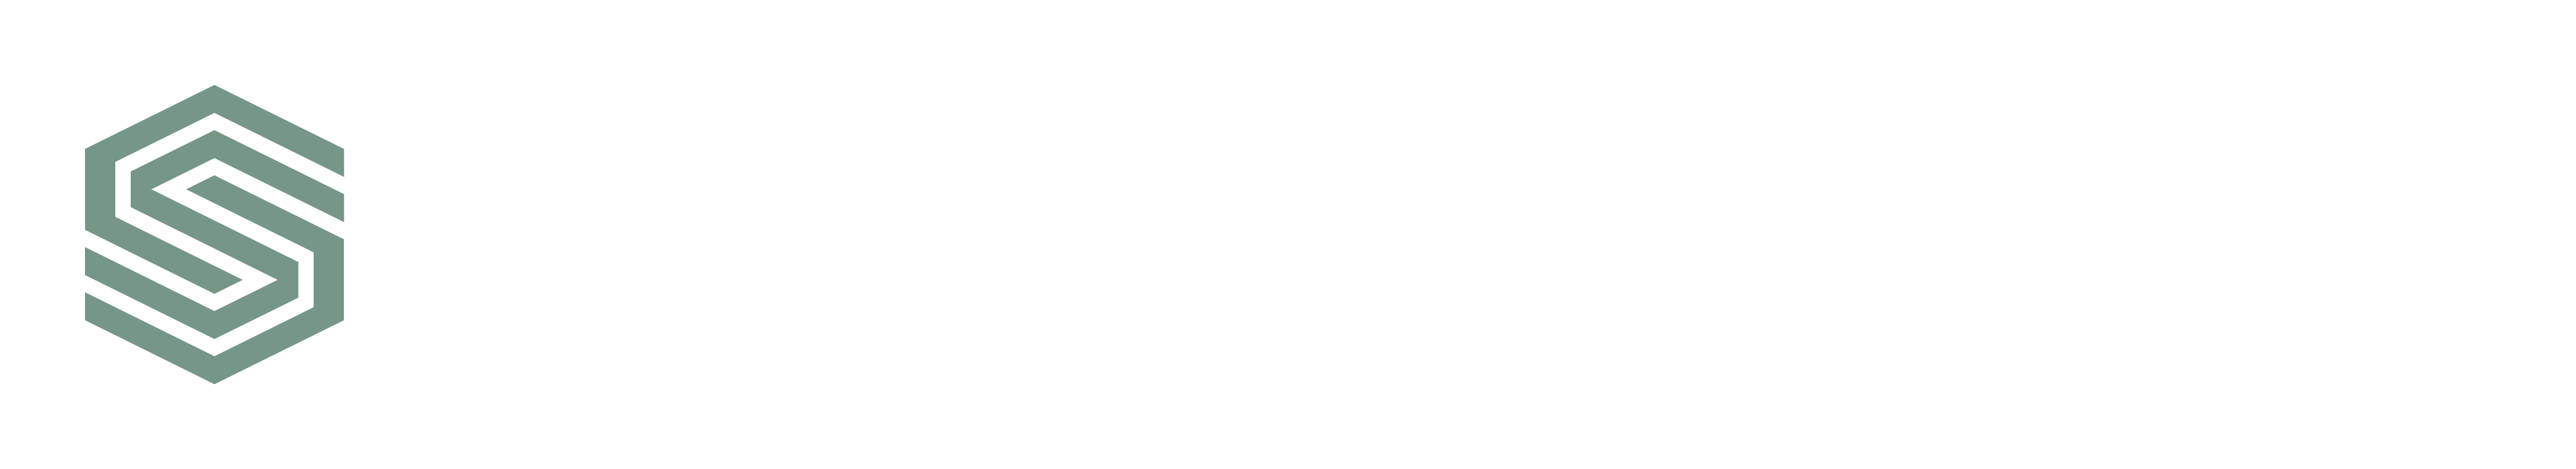 Shahbazian Law Logo